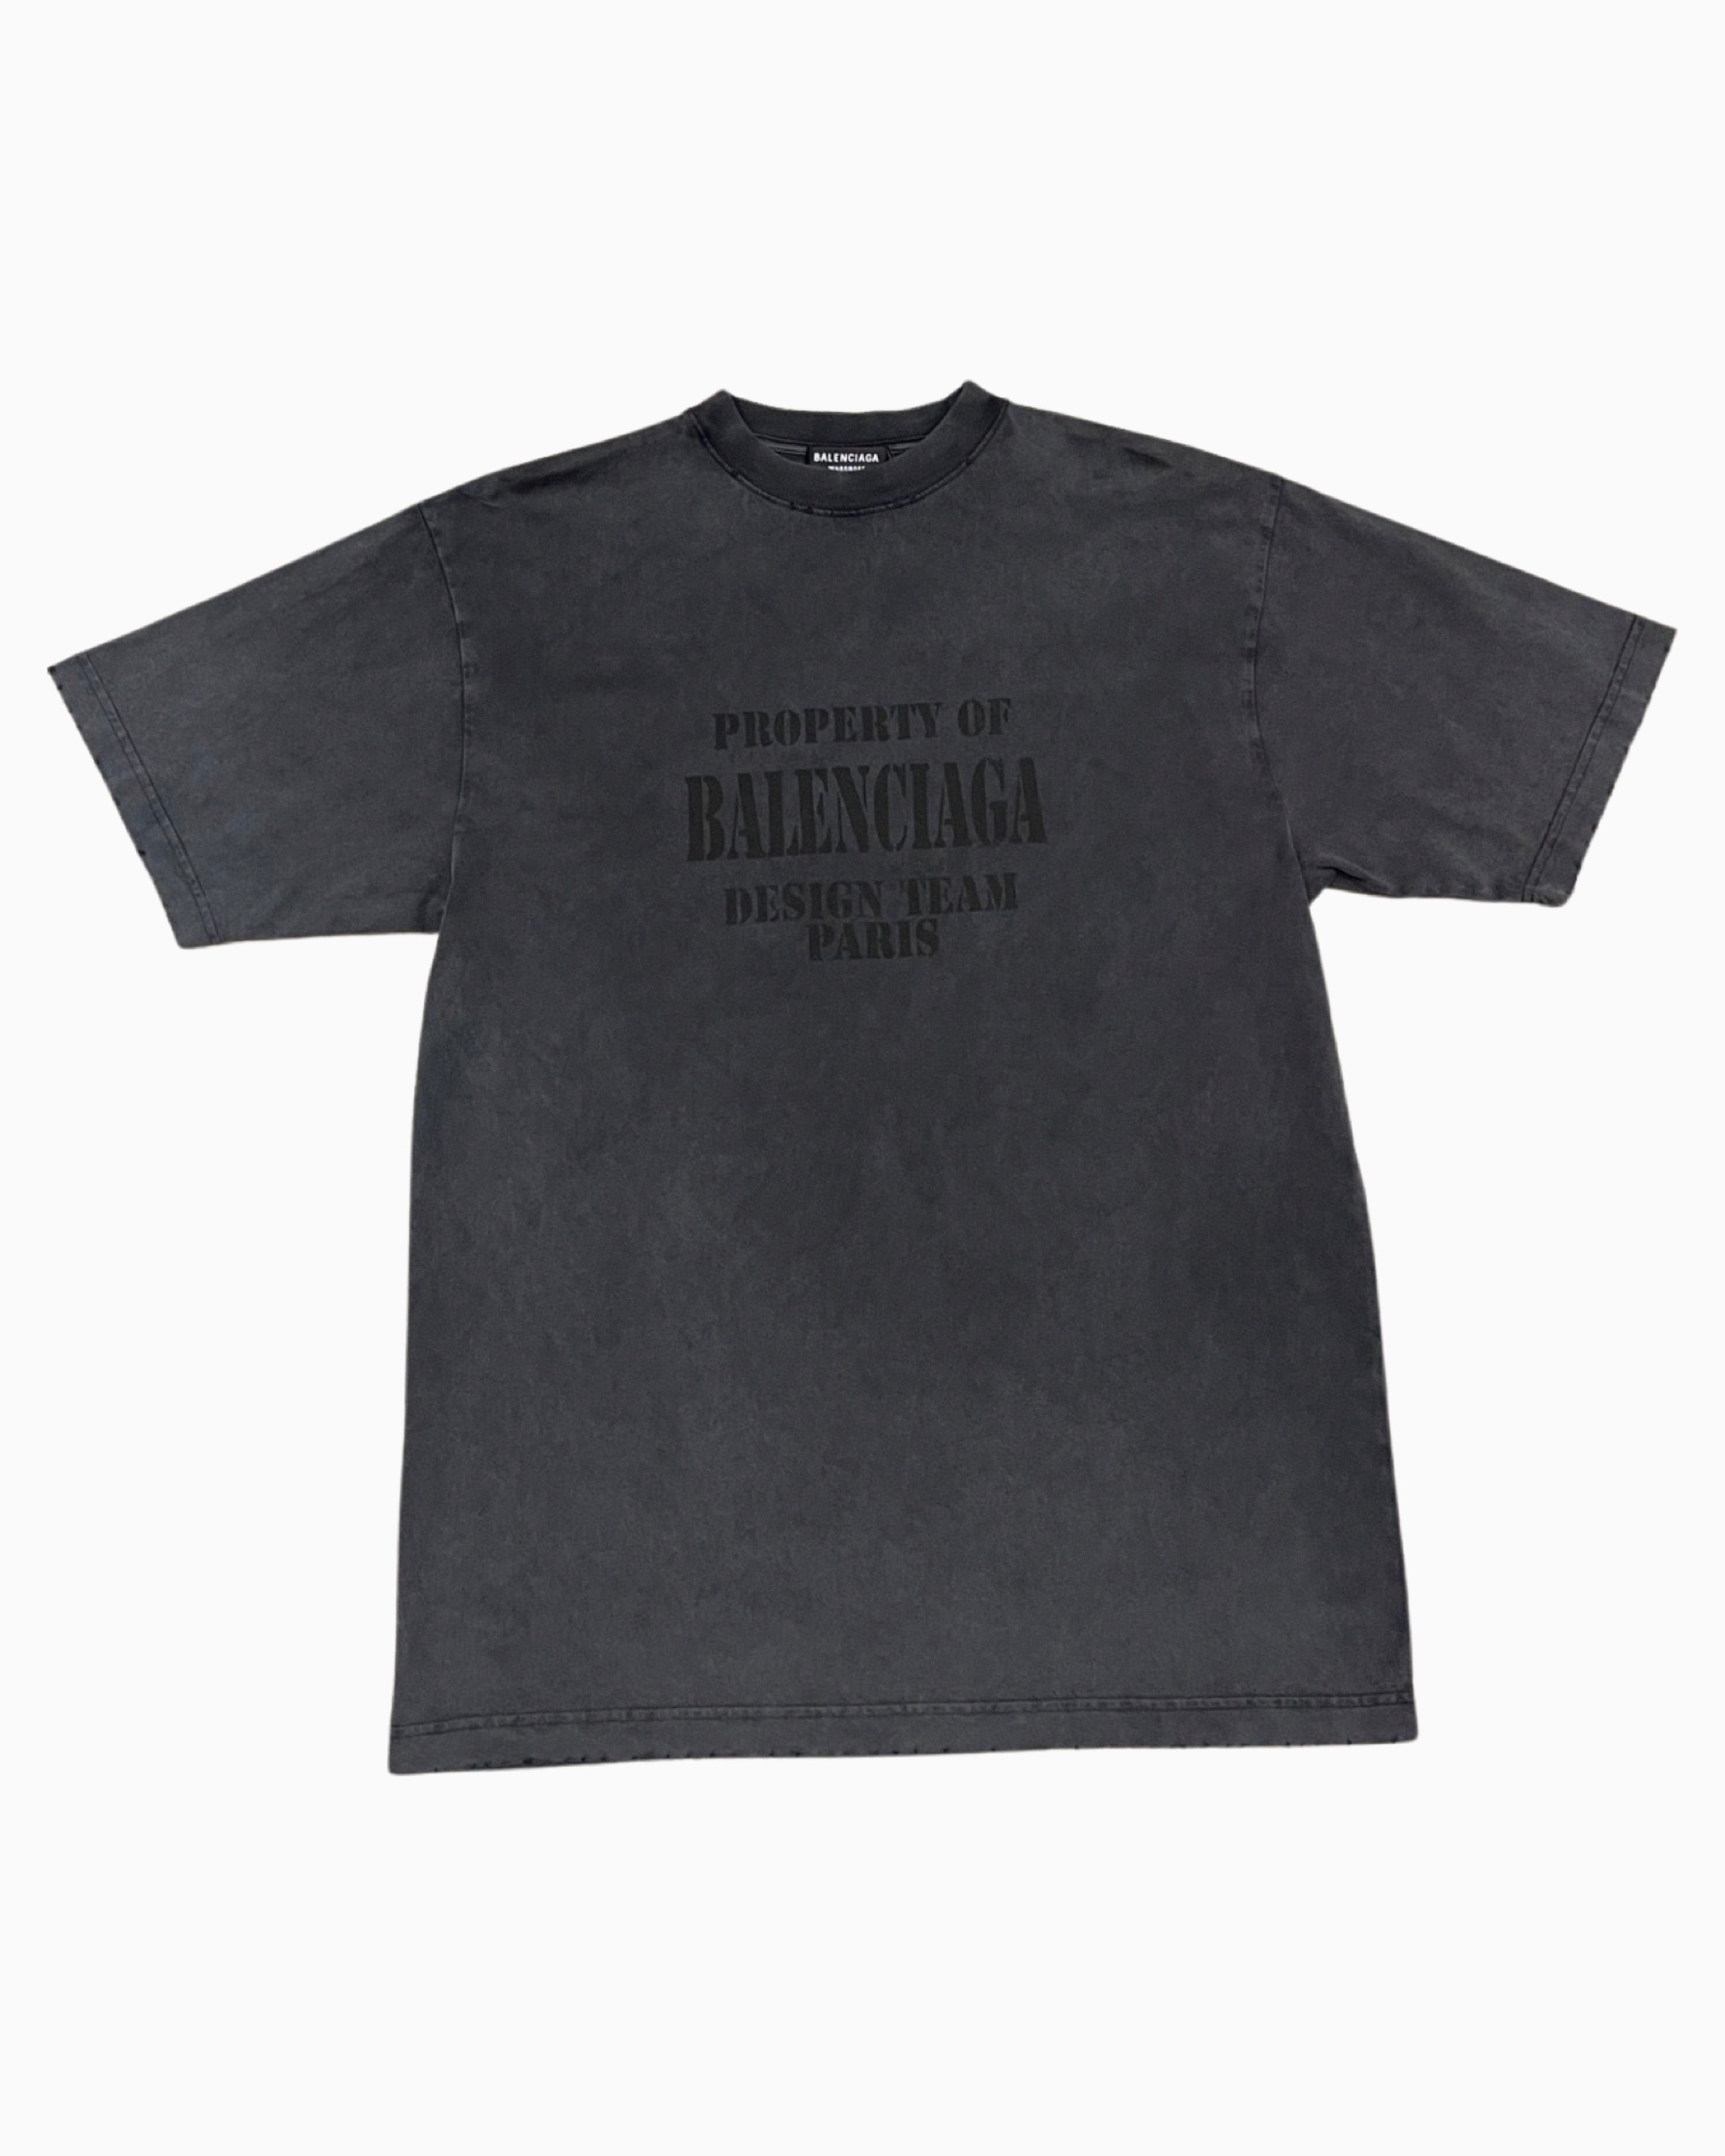 Balenciaga Property Of T-shirt – FUTURO